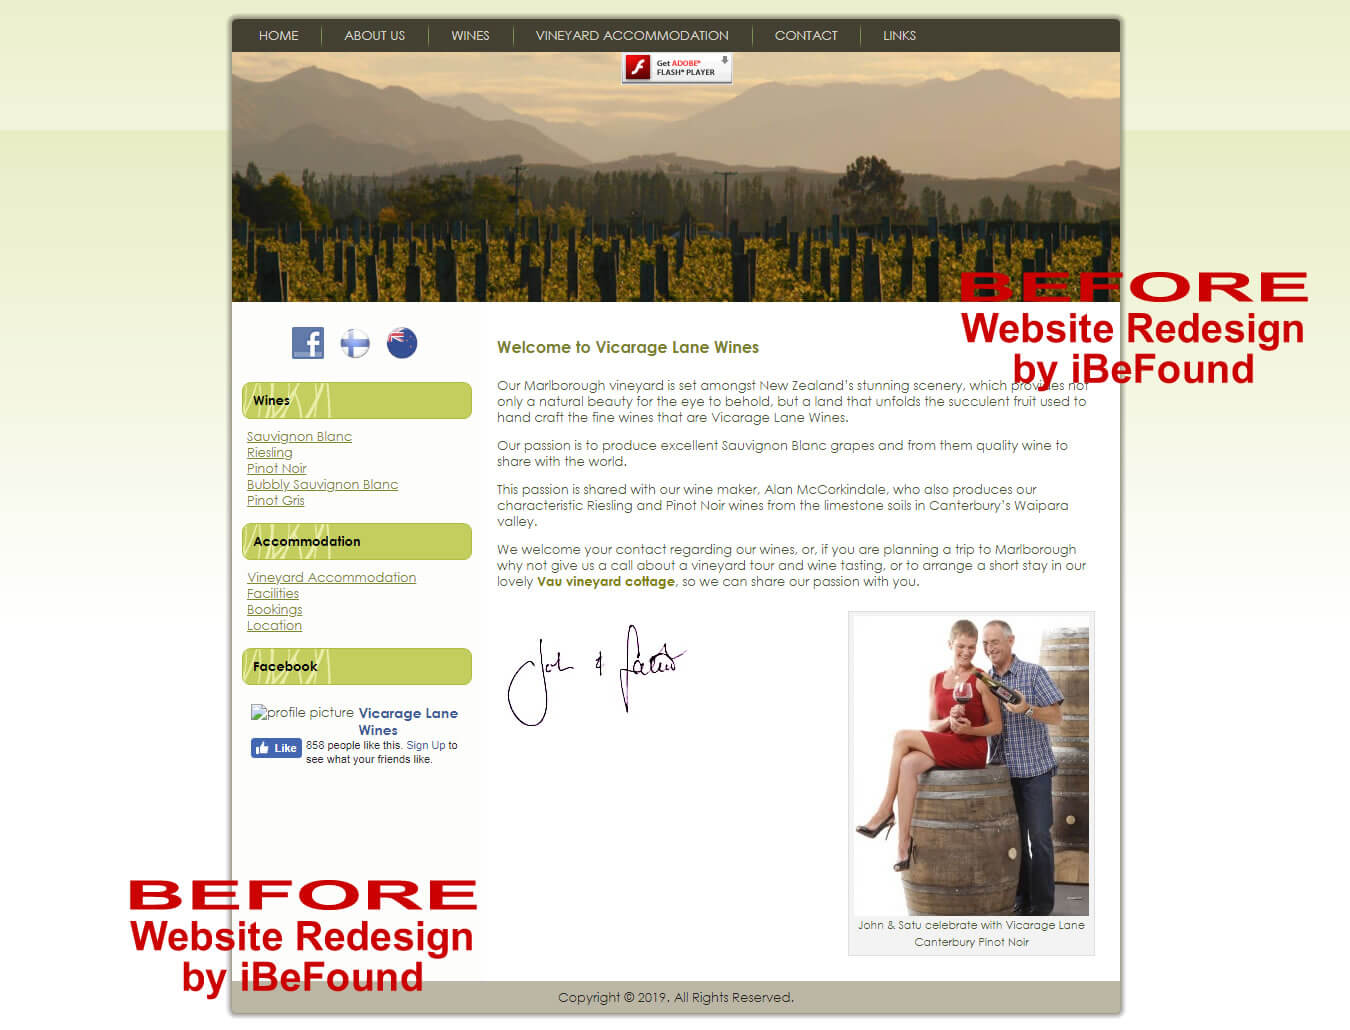 Homepage Of Vicarage Lane Wines Before Website Redesign By IBeFound Digital Marketing